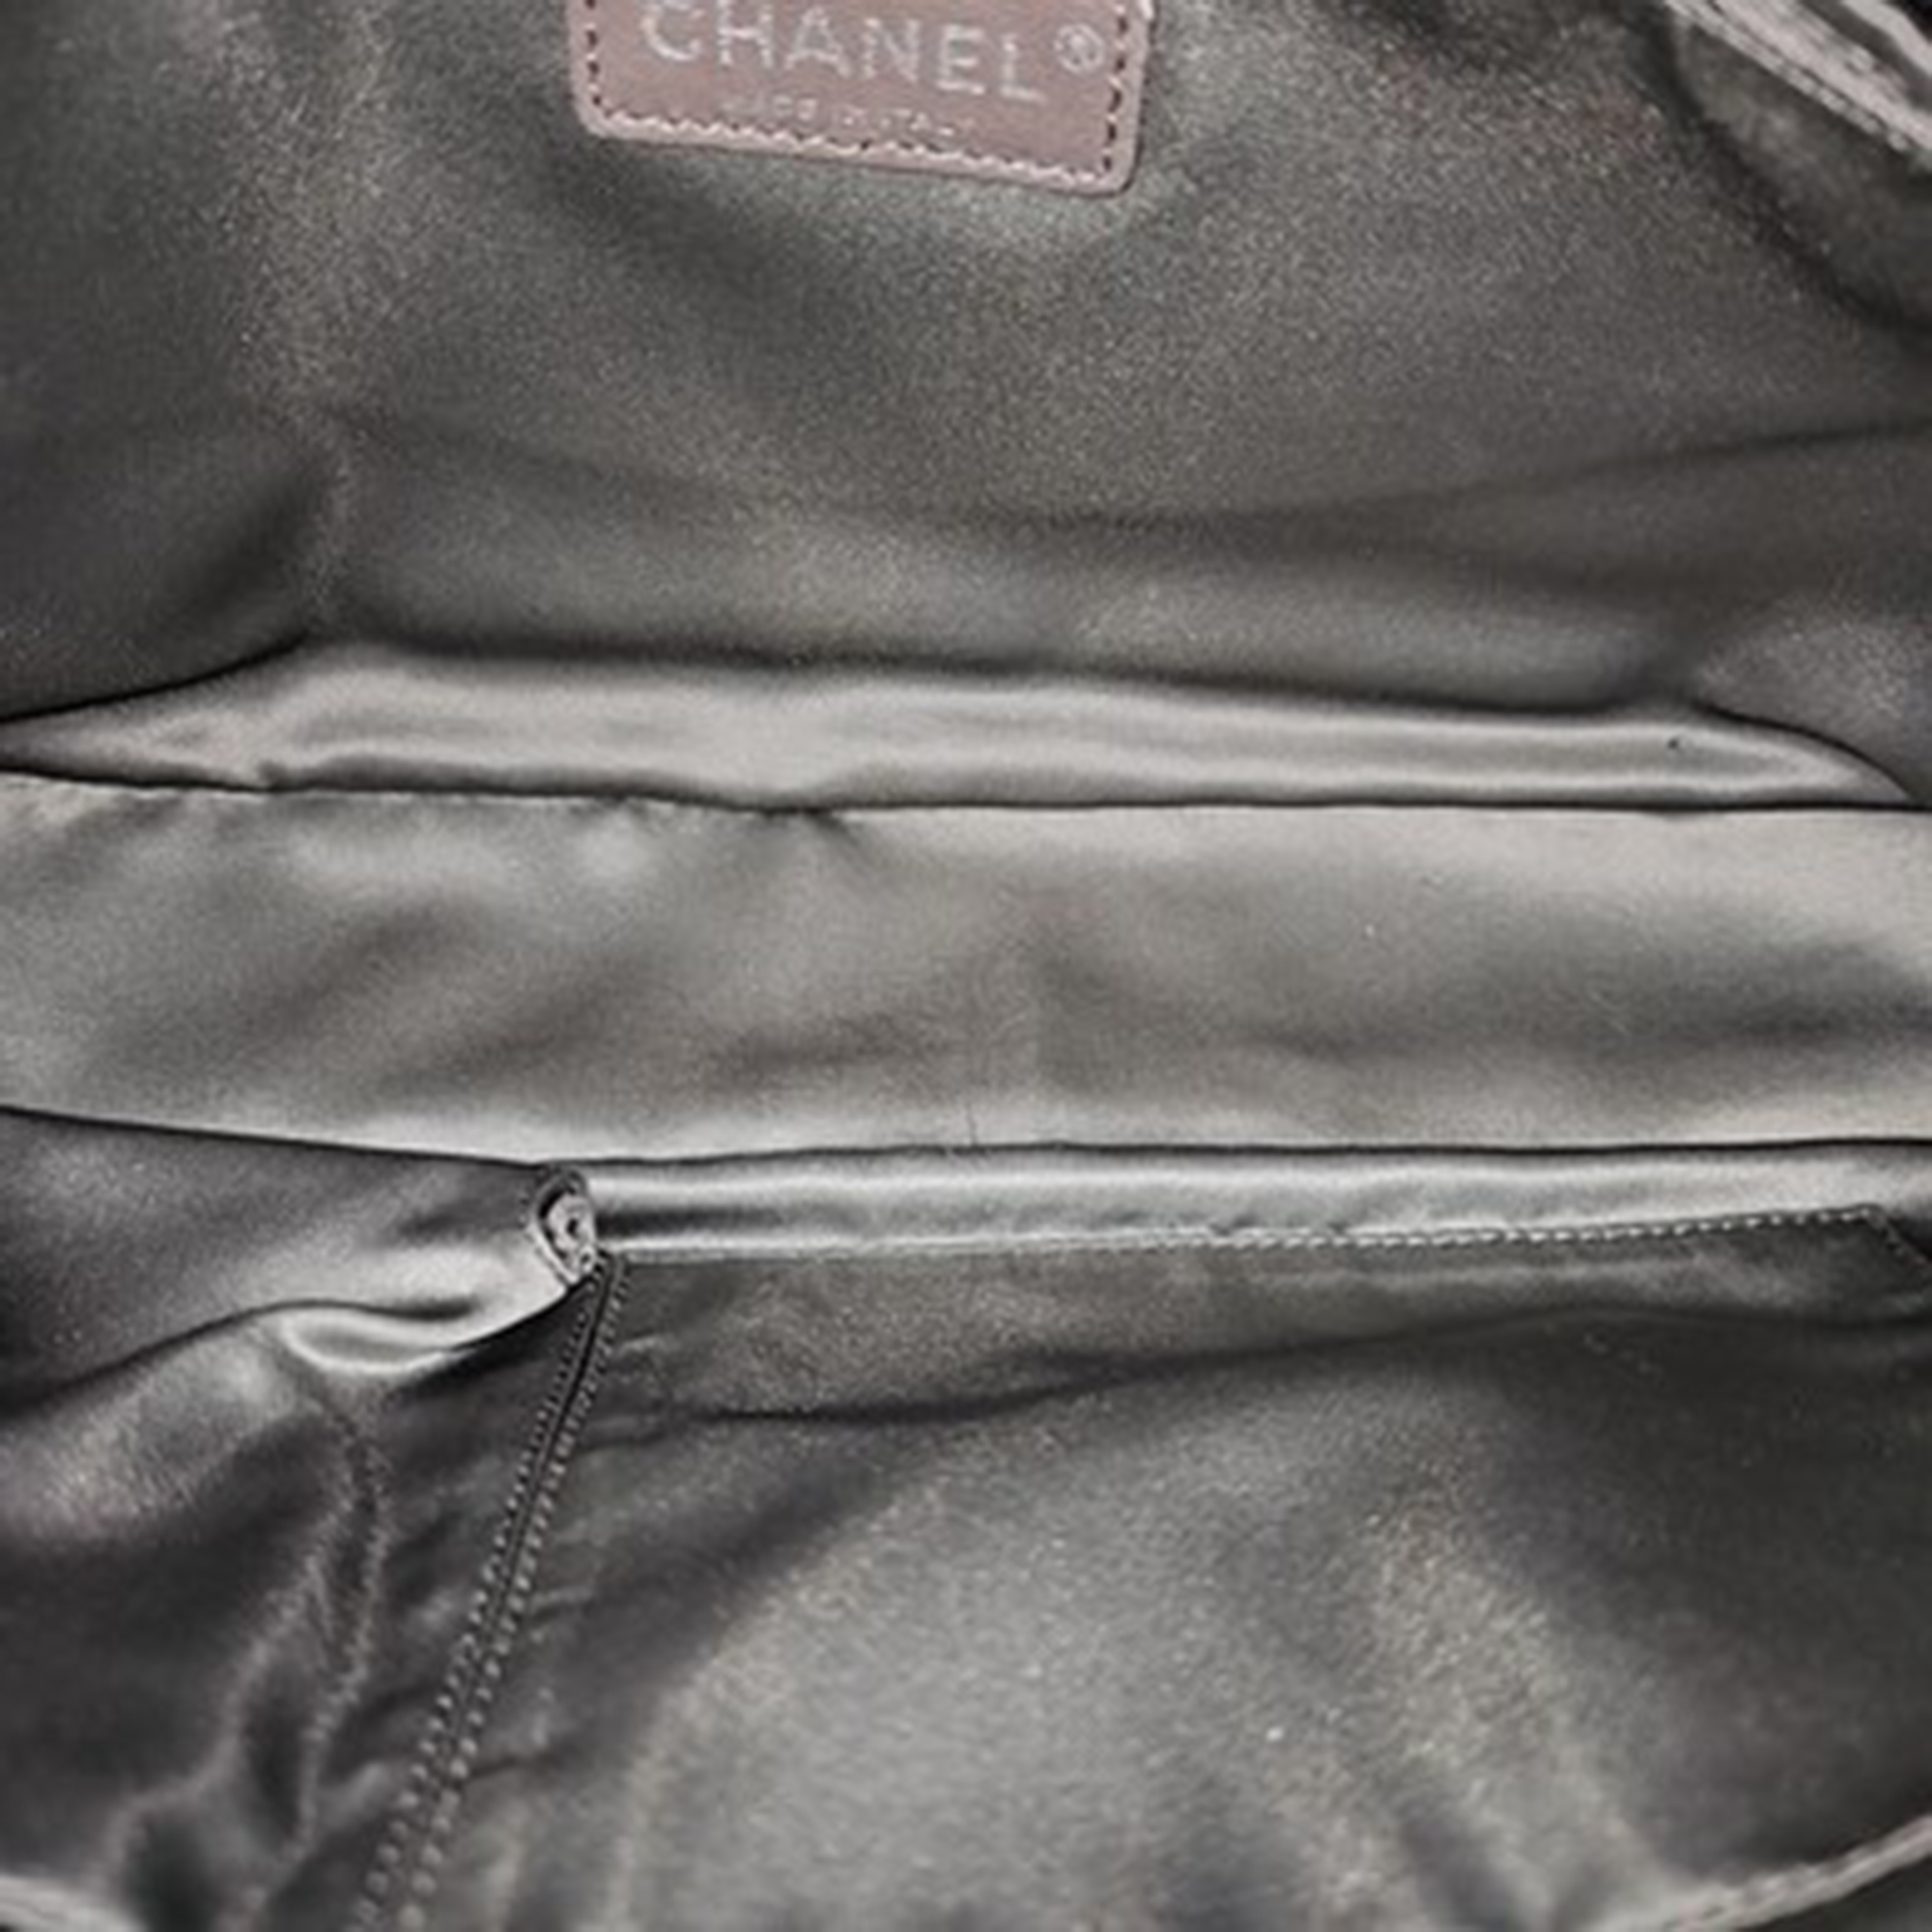 Chanel Perfume Chain Shoulder Bag